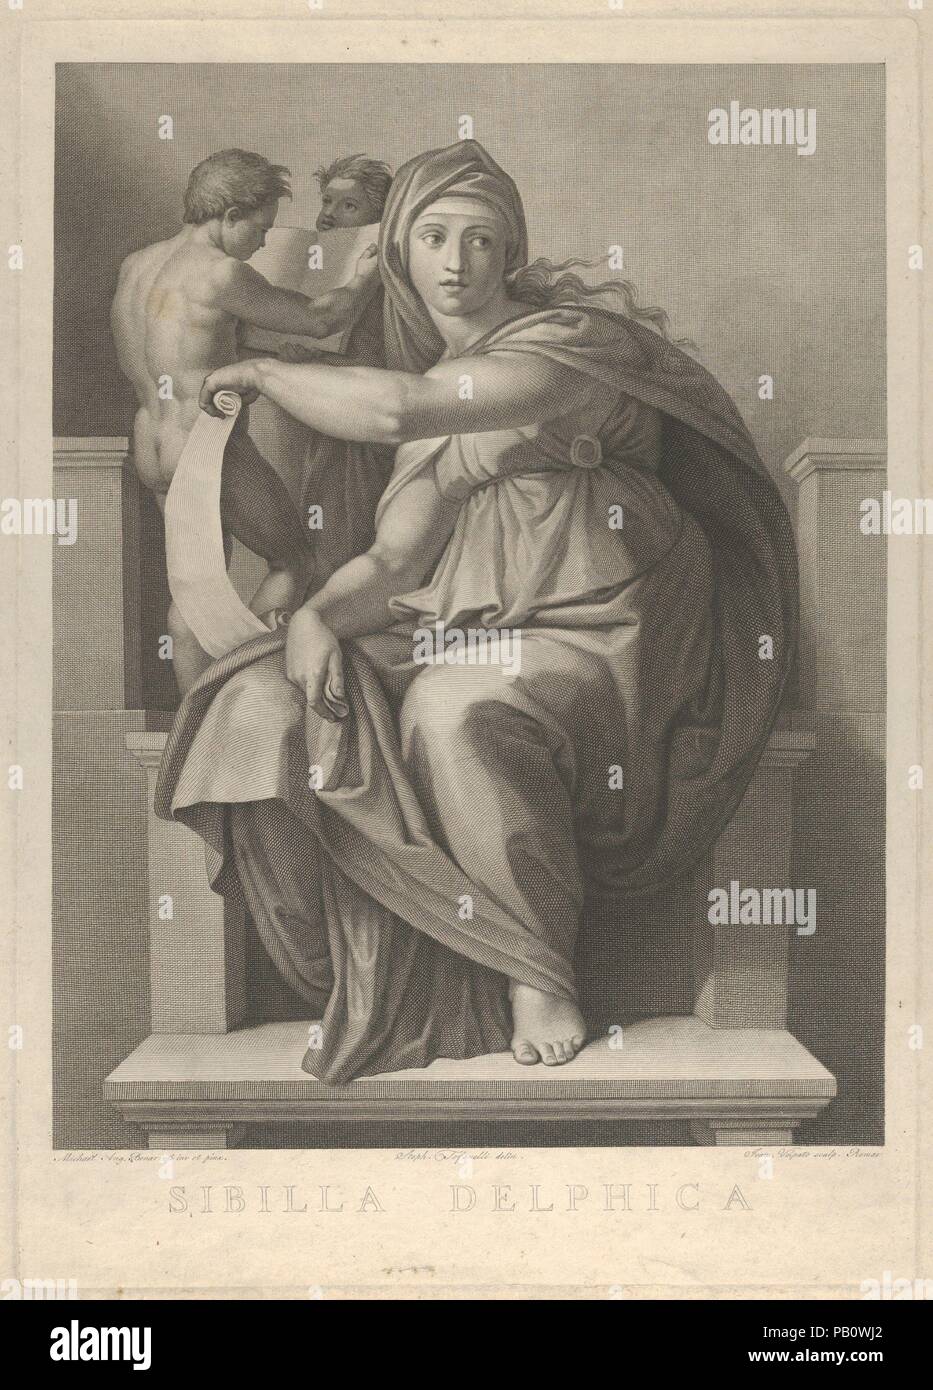 The Delphic Sibyl after the fresco by Michelangelo in the Sistine Chapel. Artist: After Michelangelo Buonarroti (Italian, Caprese 1475-1564 Rome); Giovanni Volpato (Italian, Bassano 1732-1803 Rome); Intermediary draughtsman Stephano Tofanelli (Italian, 1752-1812). Dimensions: Sheet: 21 7/8 in. × 16 in. (55.5 × 40.6 cm)  Plate: 21 3/16 × 14 15/16 in. (53.8 × 38 cm). Date: 1784-90. Museum: Metropolitan Museum of Art, New York, USA. Stock Photo